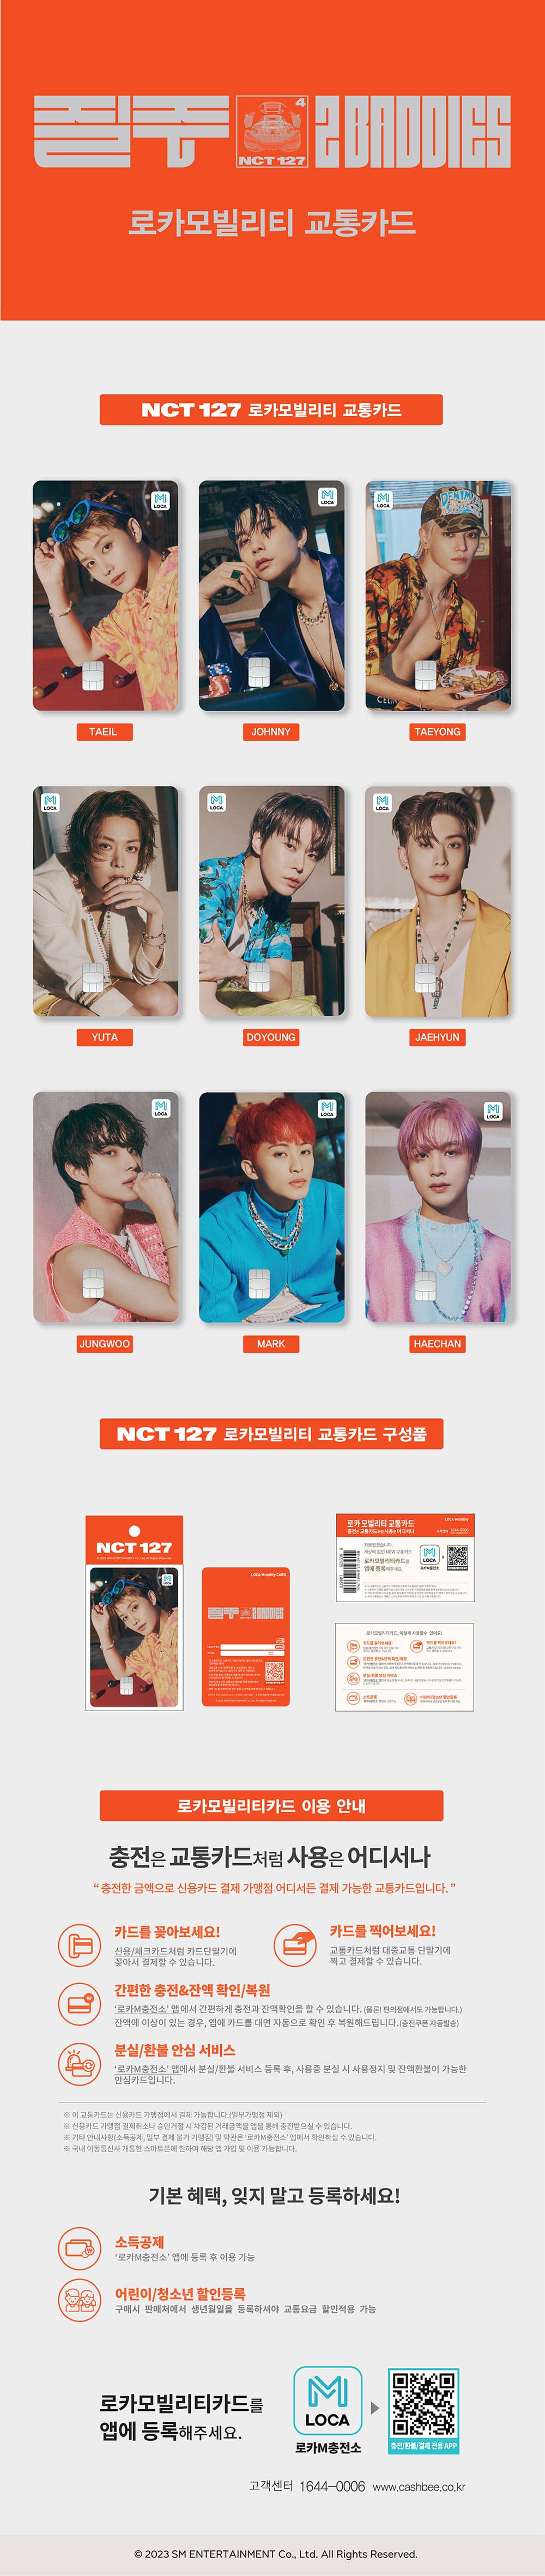 NCT 127 - 질주 (2 Baddies) TRANSPORTATION CARD (KOREA)